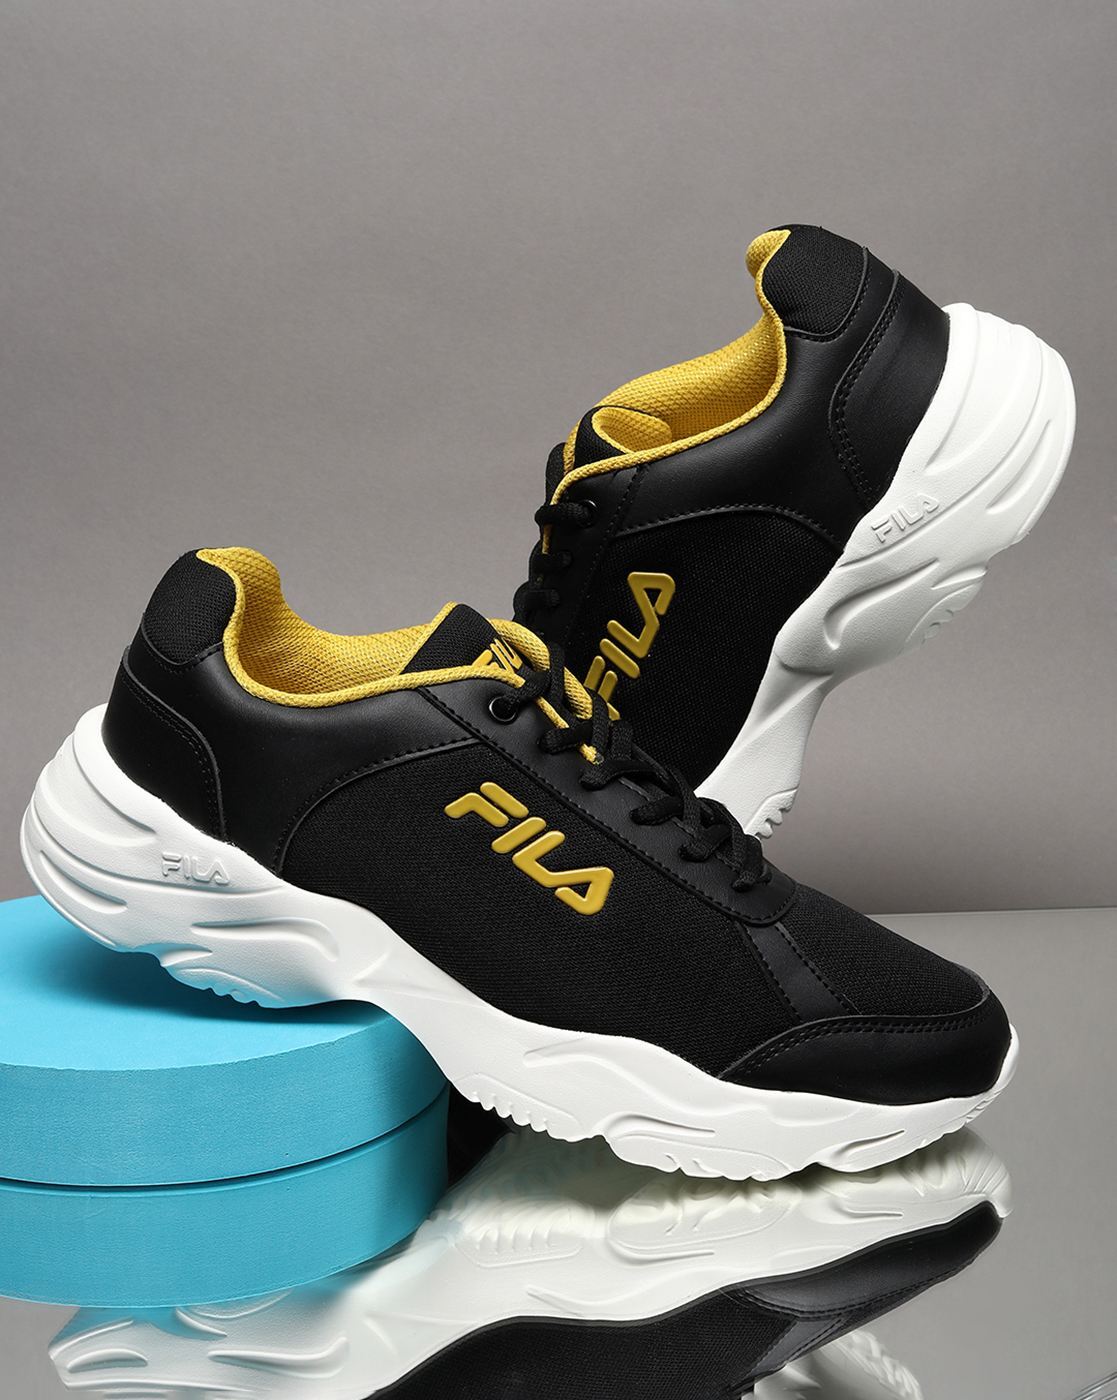 Buy Black Sports Shoes for Men by FILA Online